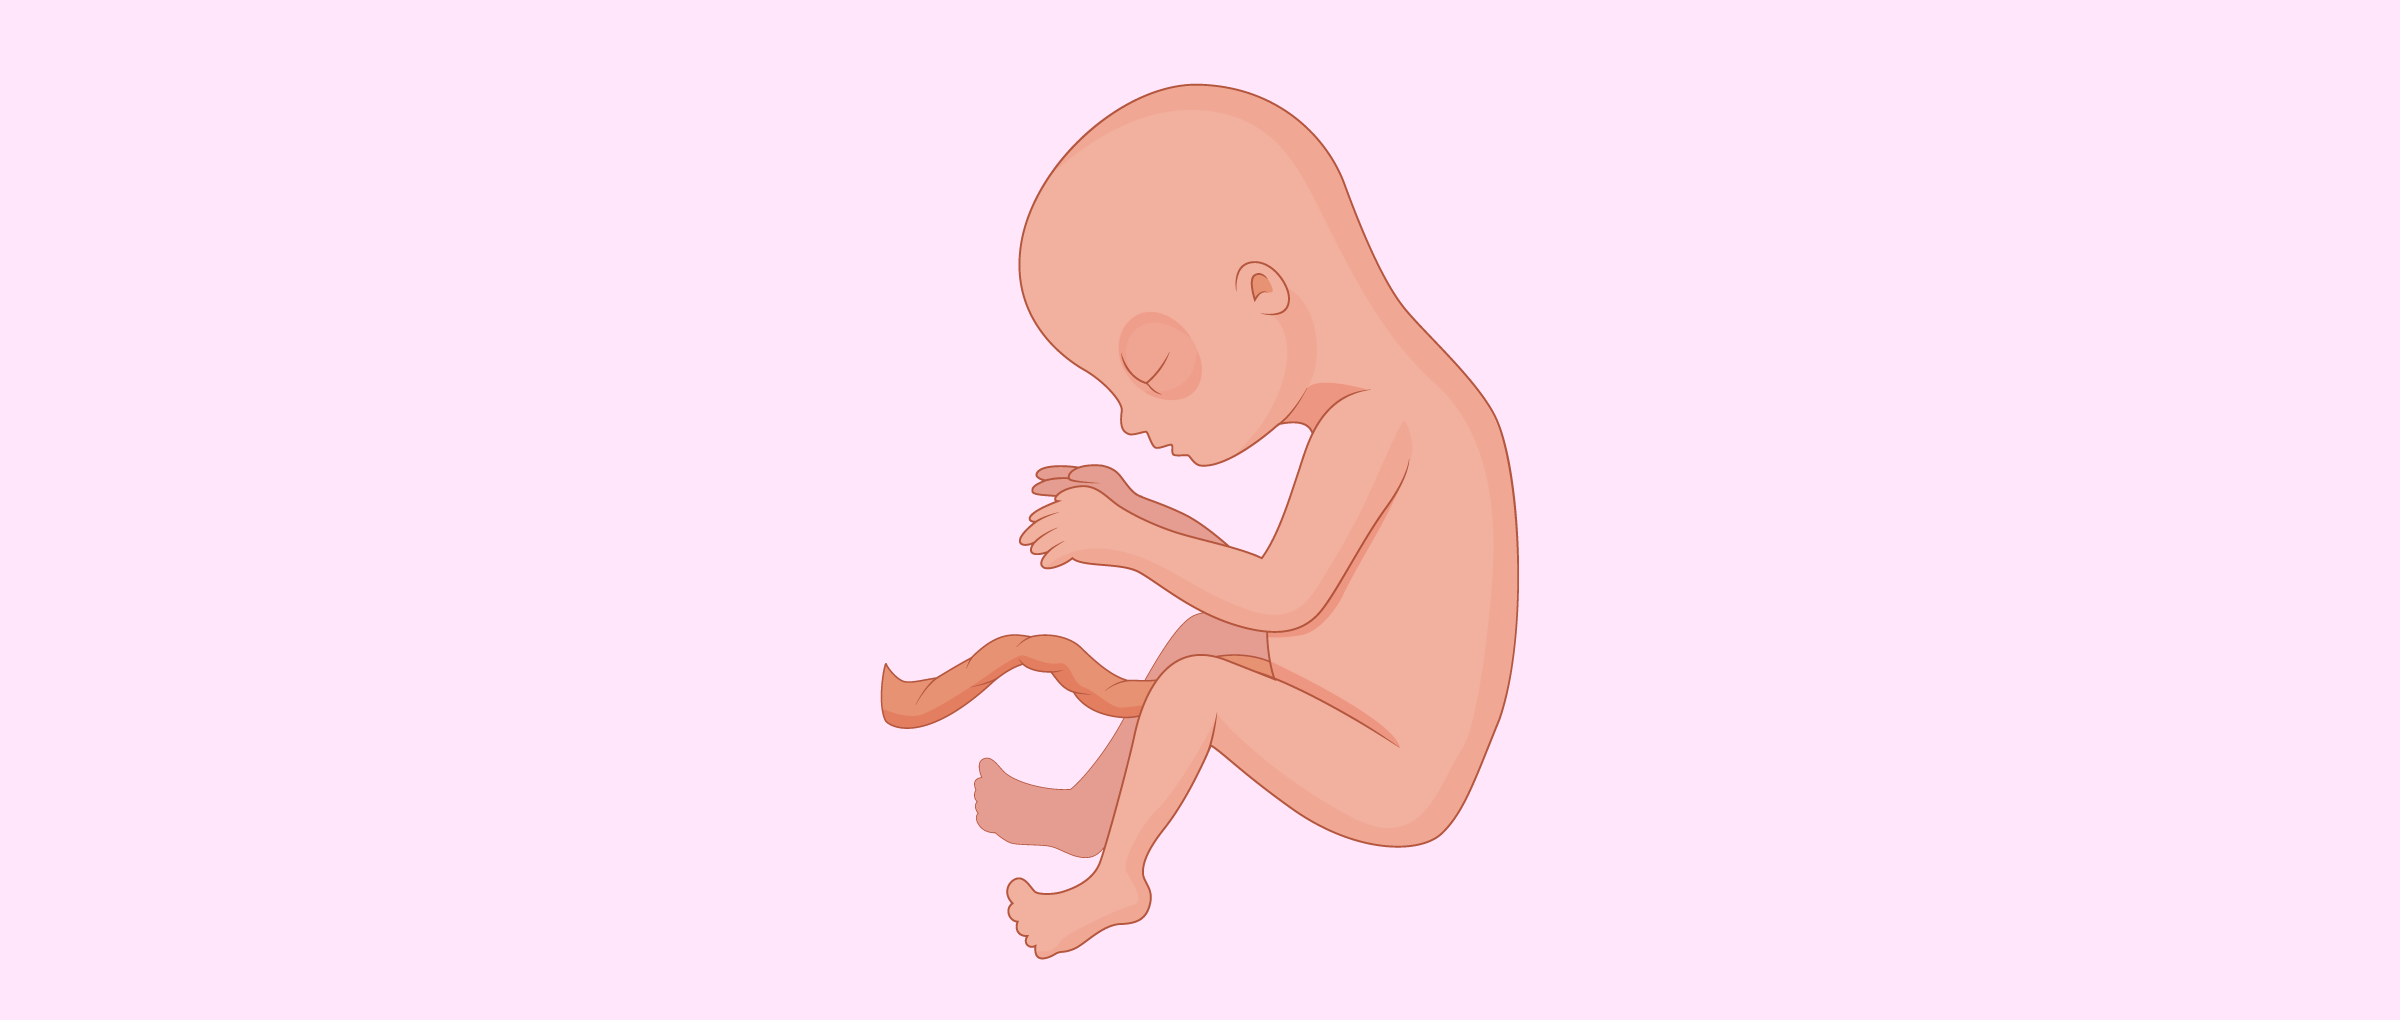 Changes in the foetus at 13 weeks